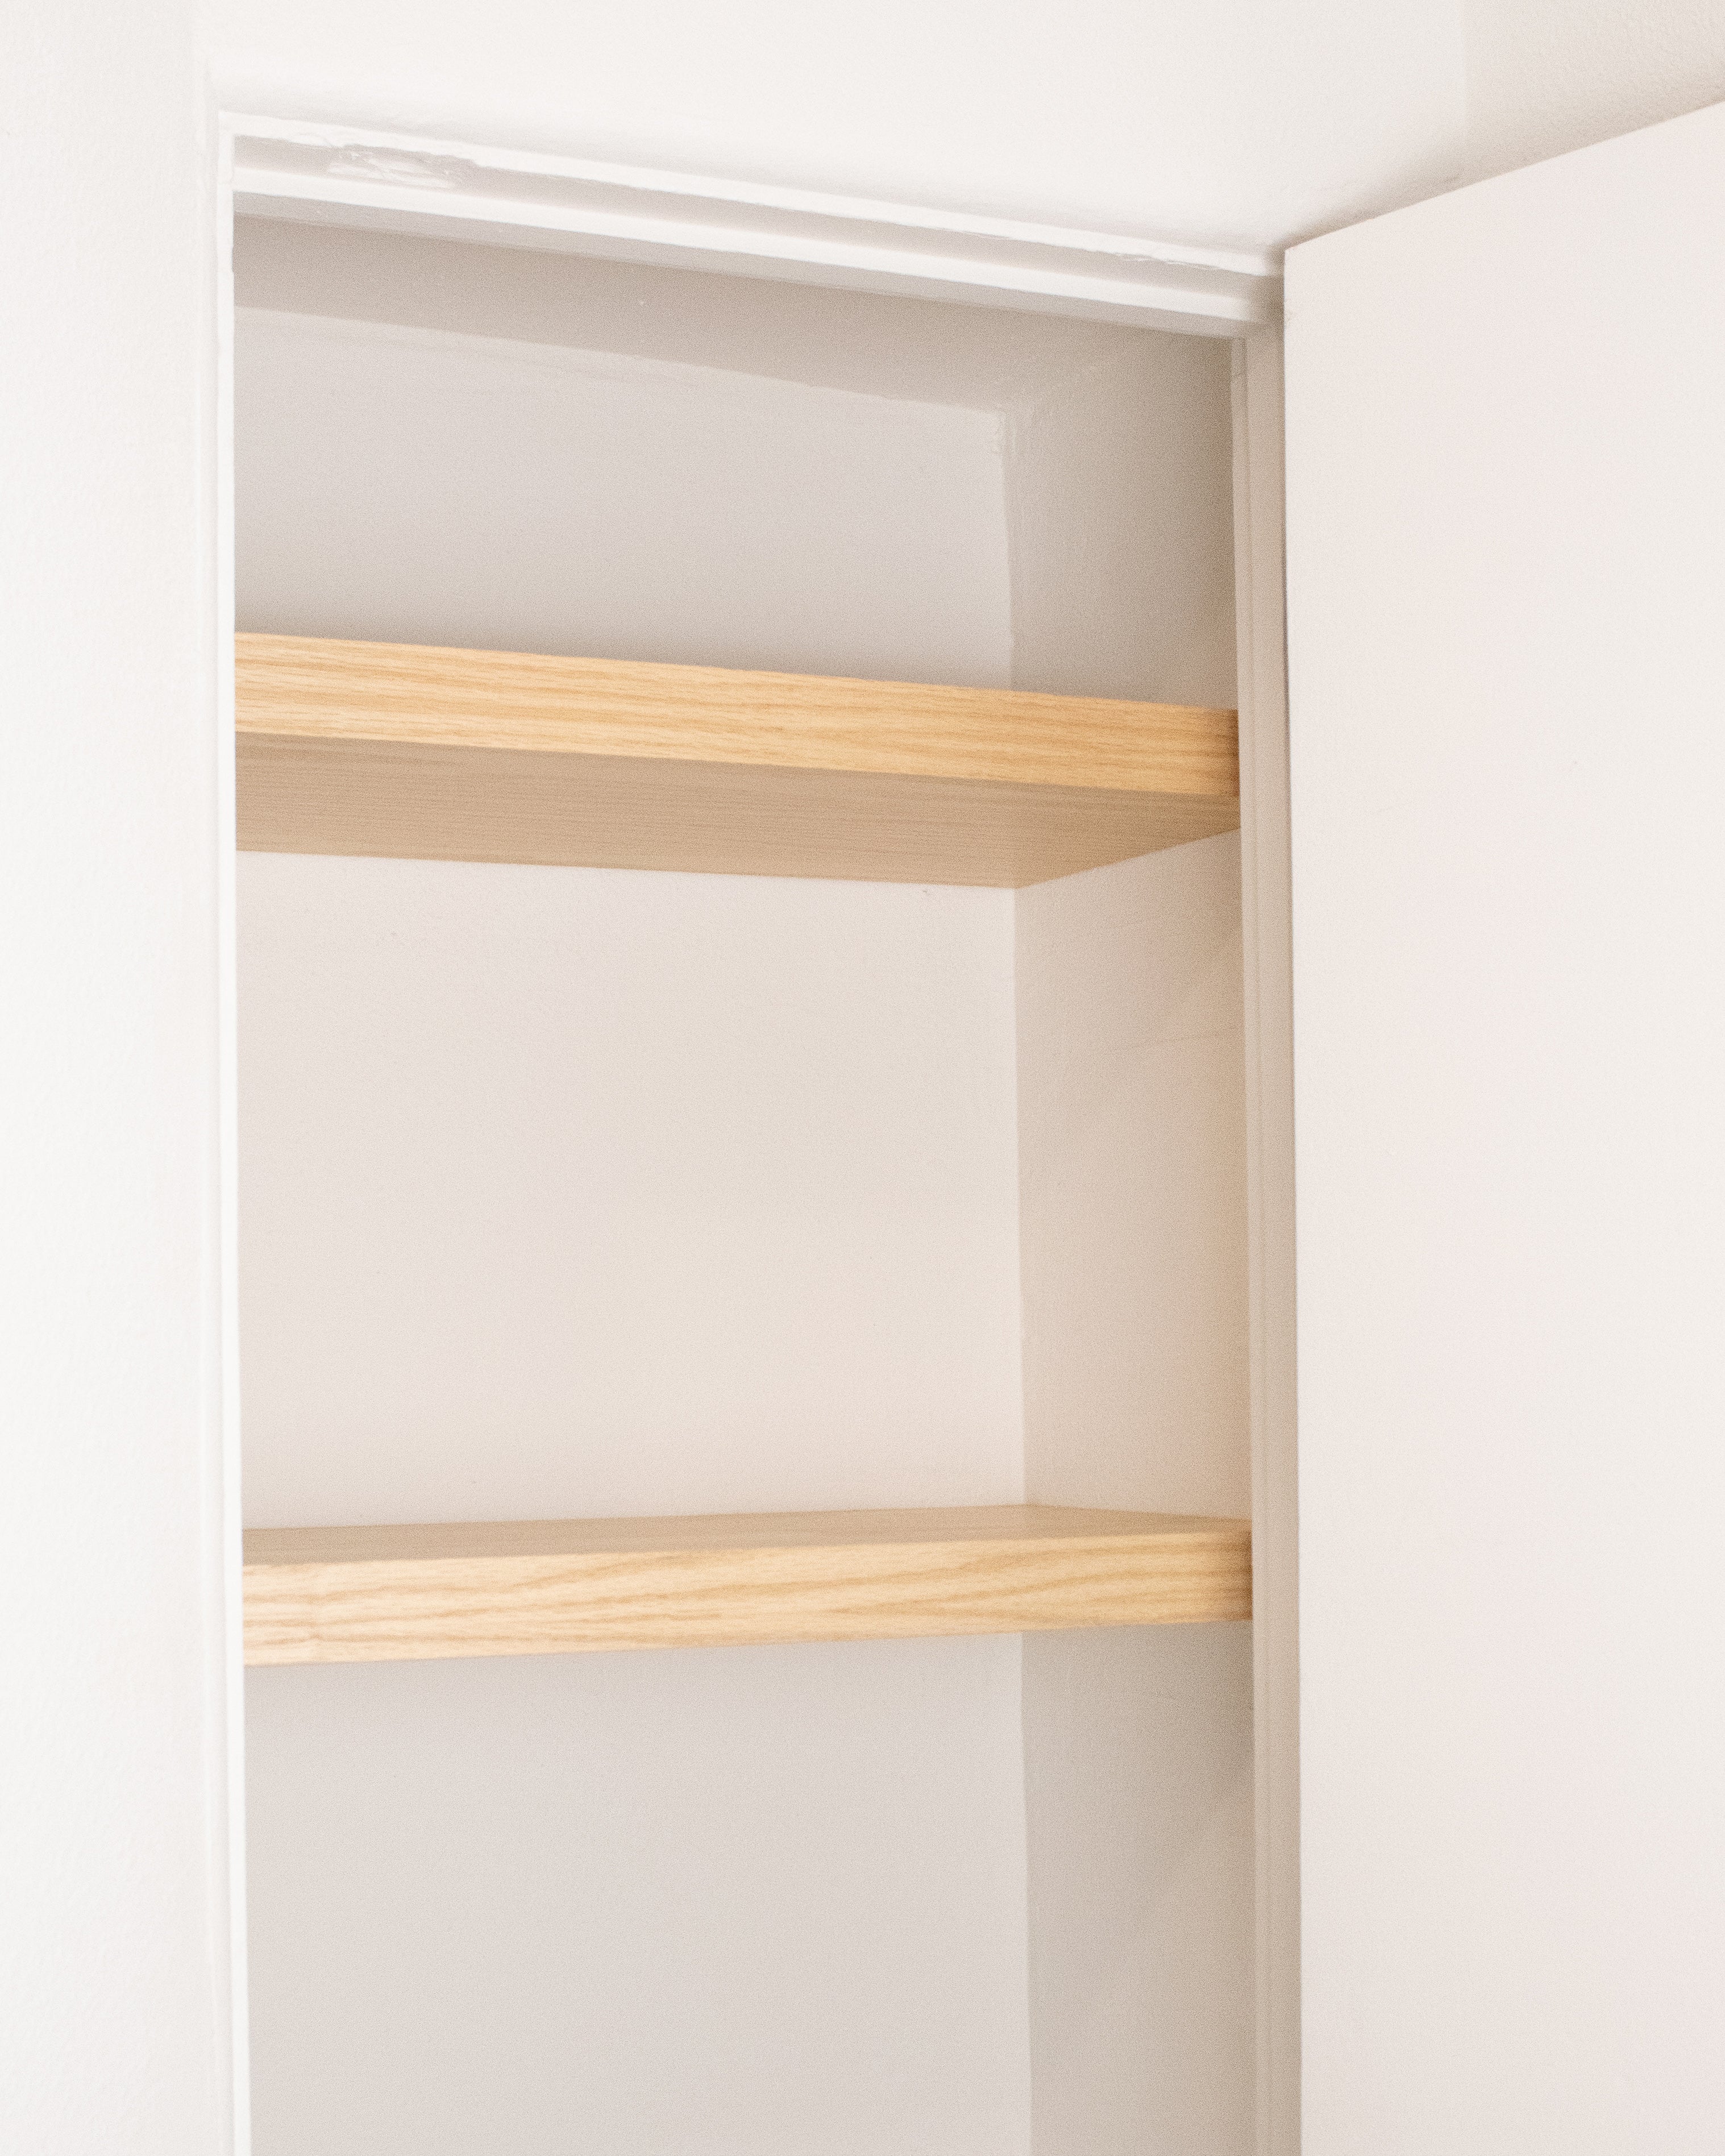 U-Paint MDF 2-4" thick Cabinet Top / Slab Shelf